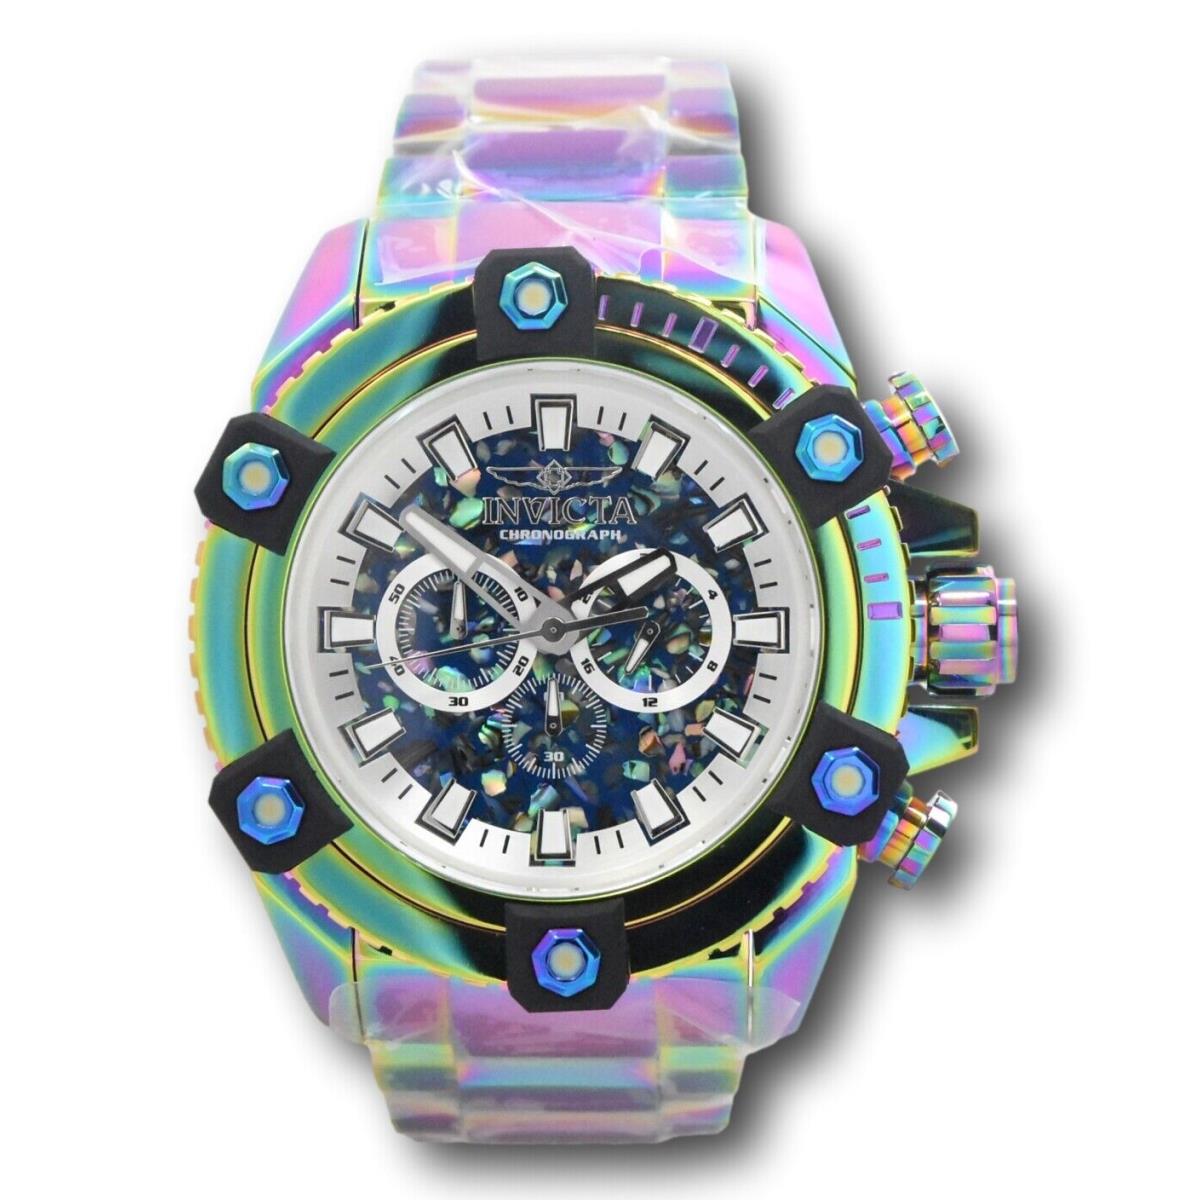 Invicta Grand Octane Rainbow Mens 64mm Iridescent Abalone Mop Chrono Watch 35979 - Dial: Blue, Band: Blue, Bezel: Black